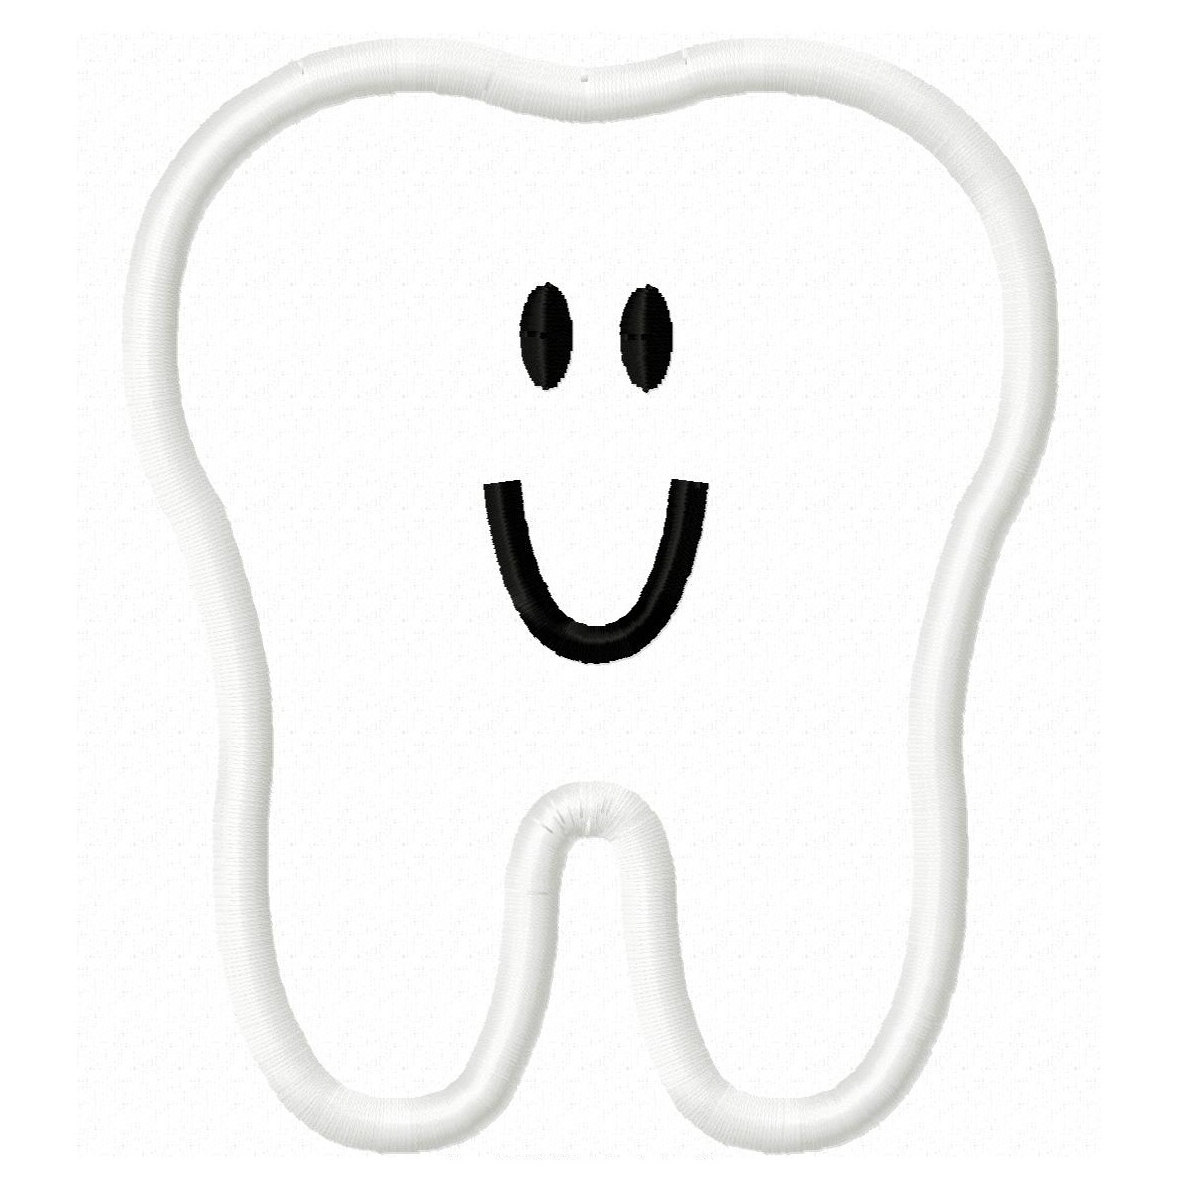 Popular items for happy teeth on Etsy